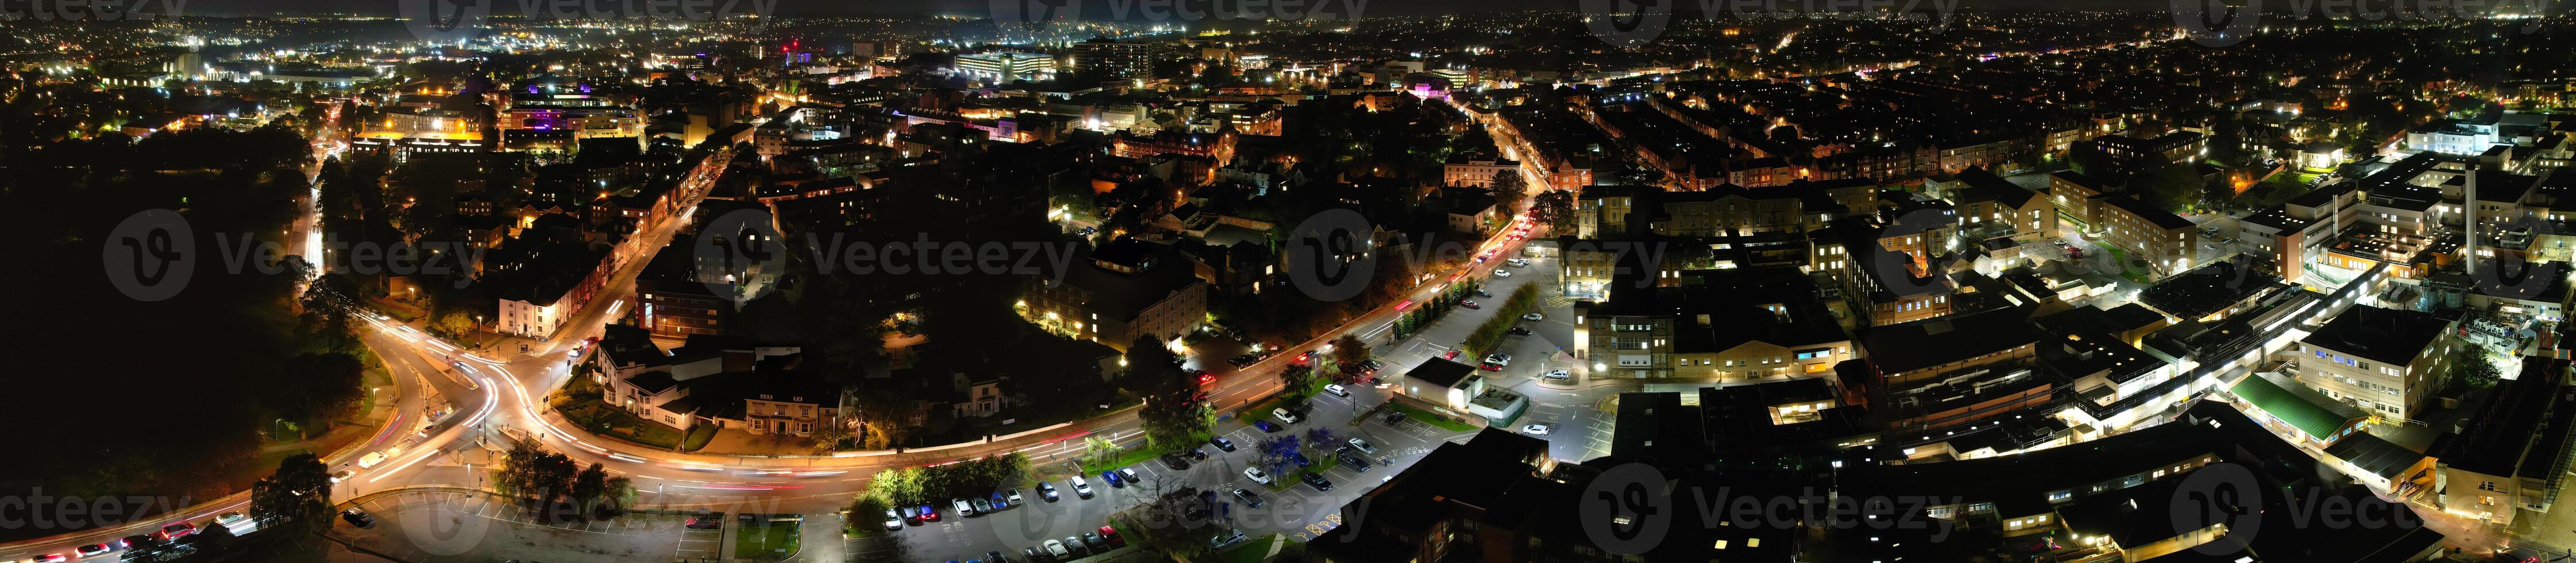 antenne panoramisch visie van verlichte Northampton stad van Engeland, uk gedurende nacht van oktober 25e, 2023 foto